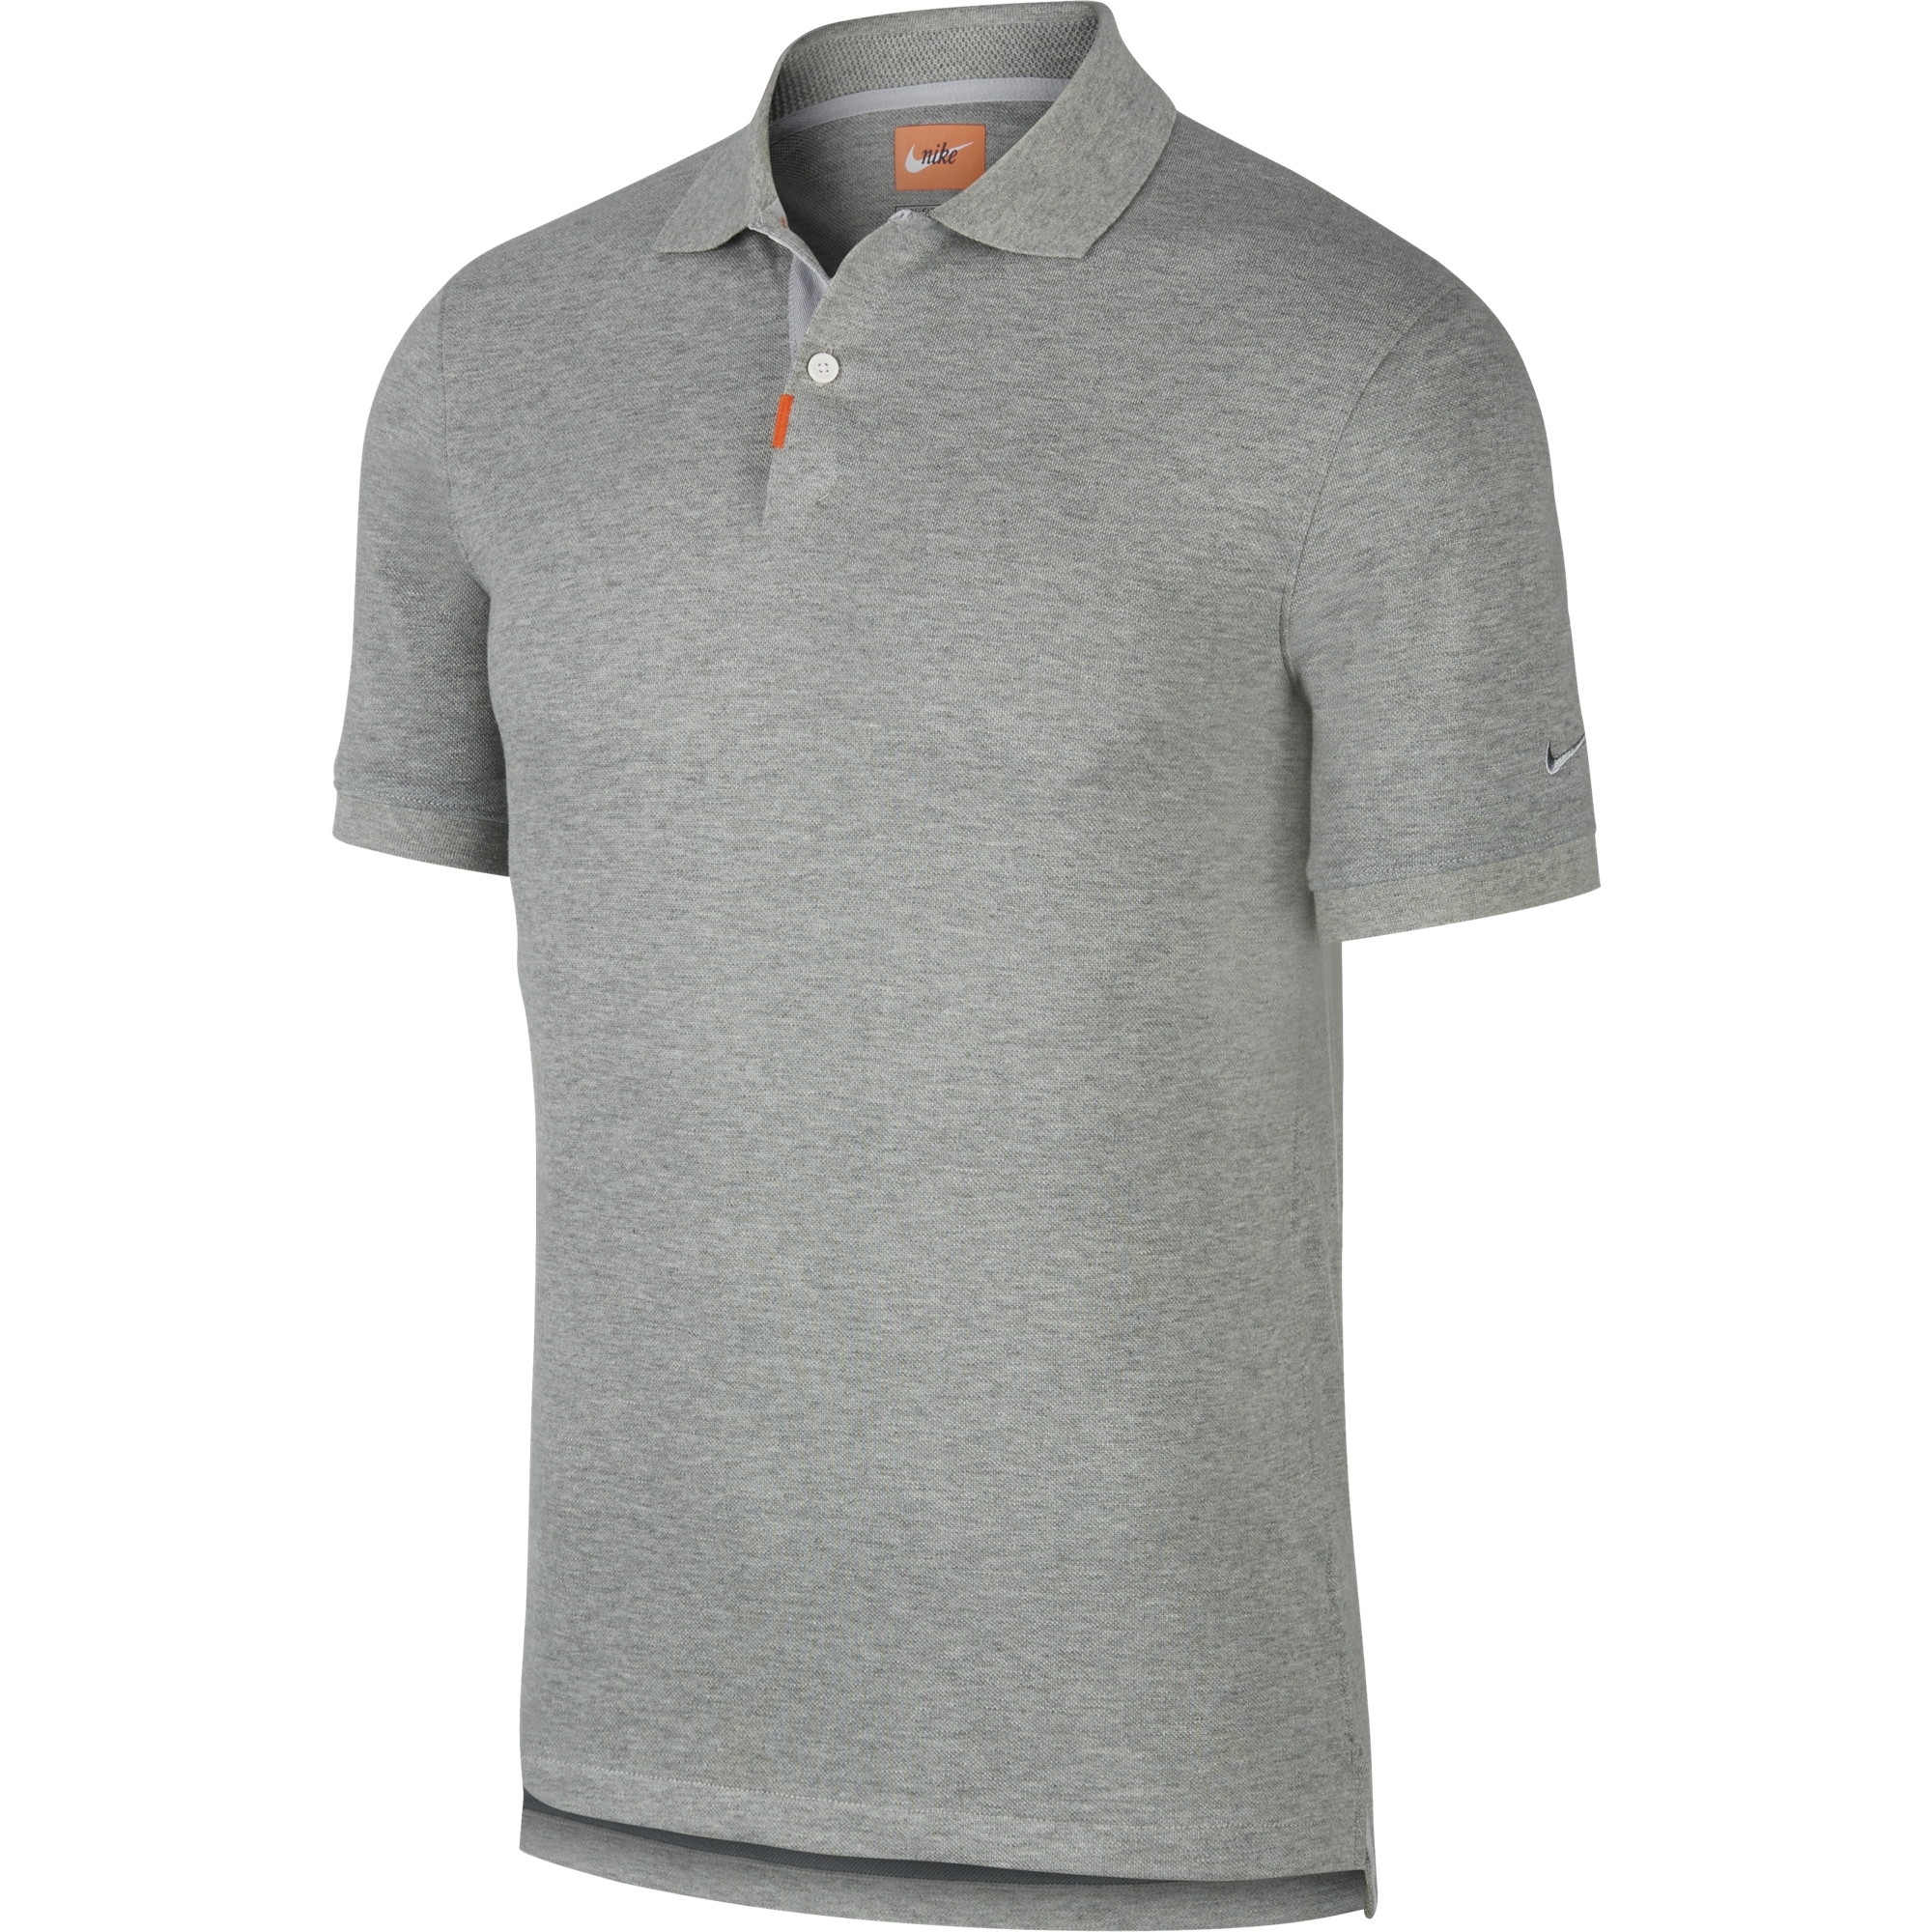 Nike Mens Dri Fit Slim Fit Breathable Golf Polo Shirt M- Chest 37.5-41’